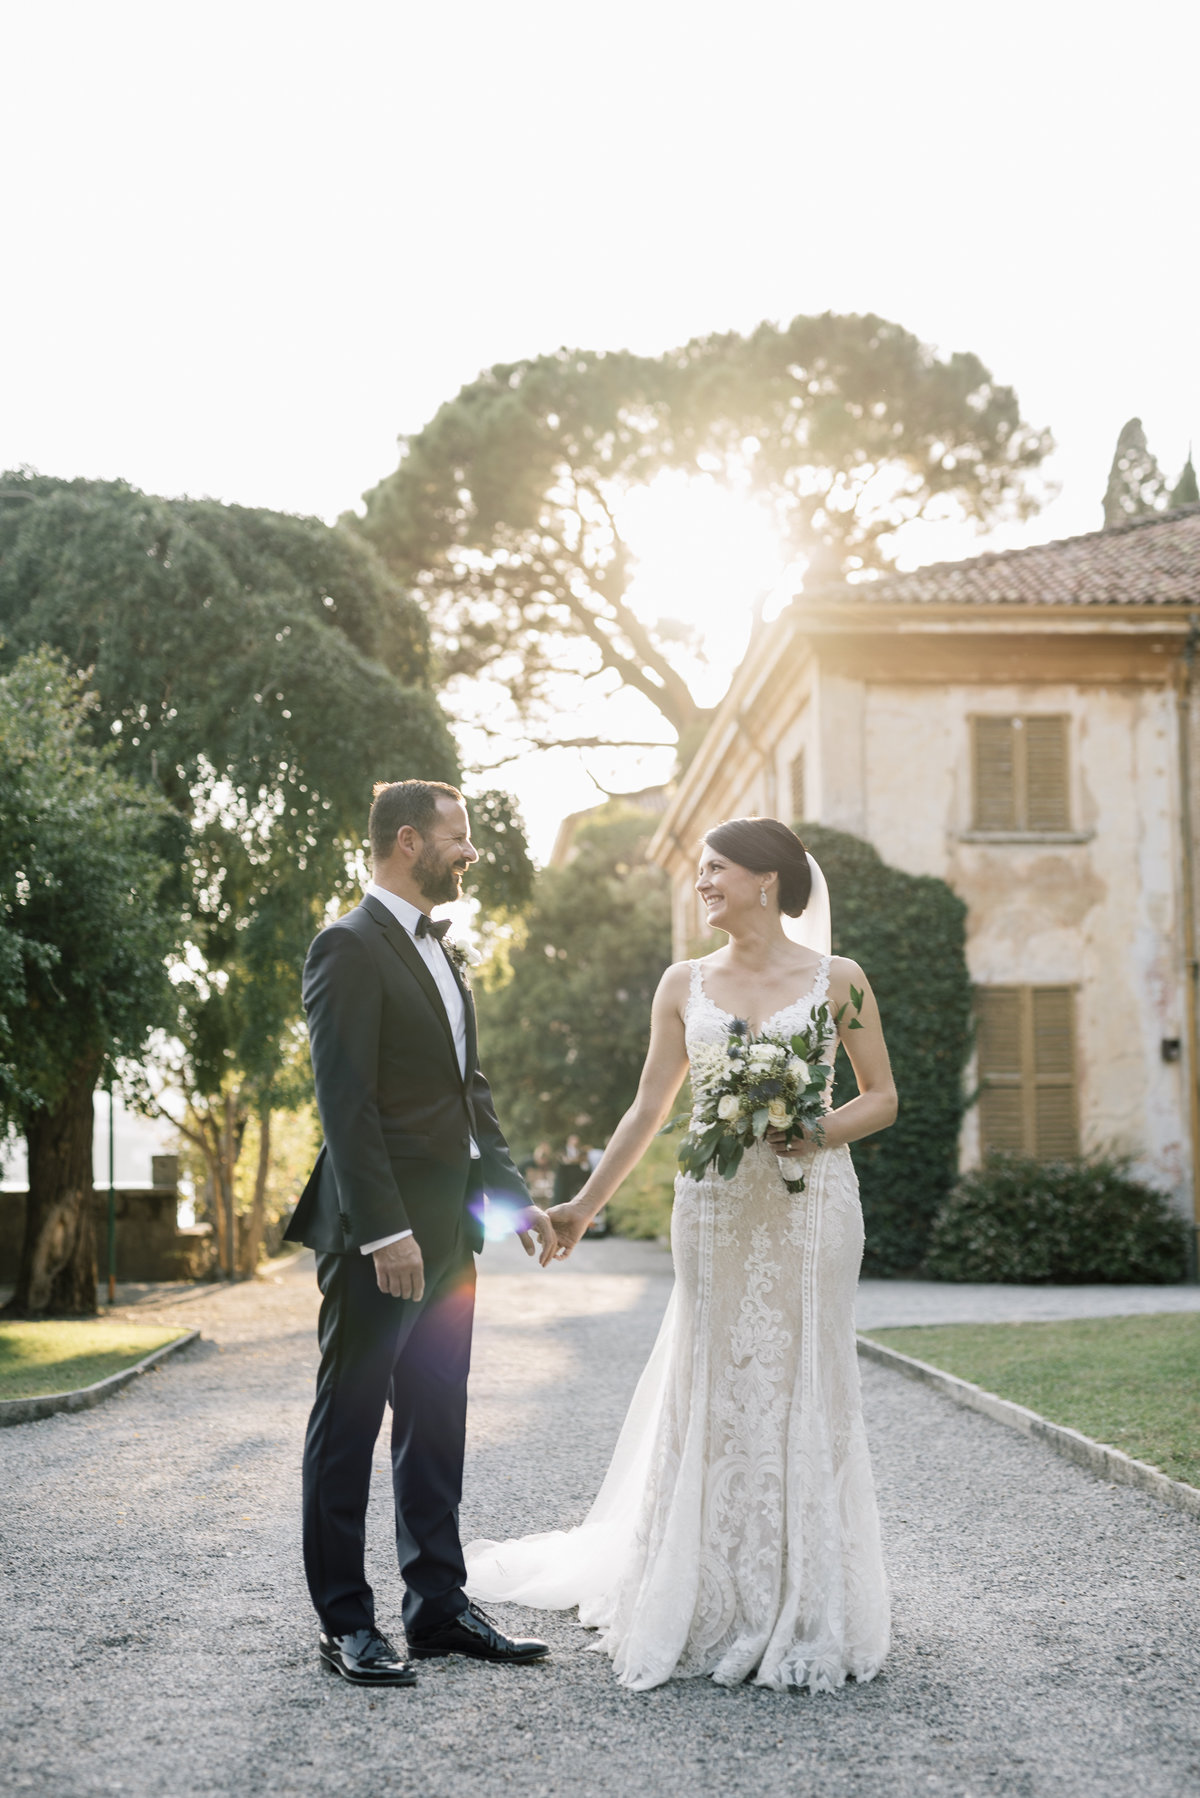 Luxury italian destination wedding: bride and groom